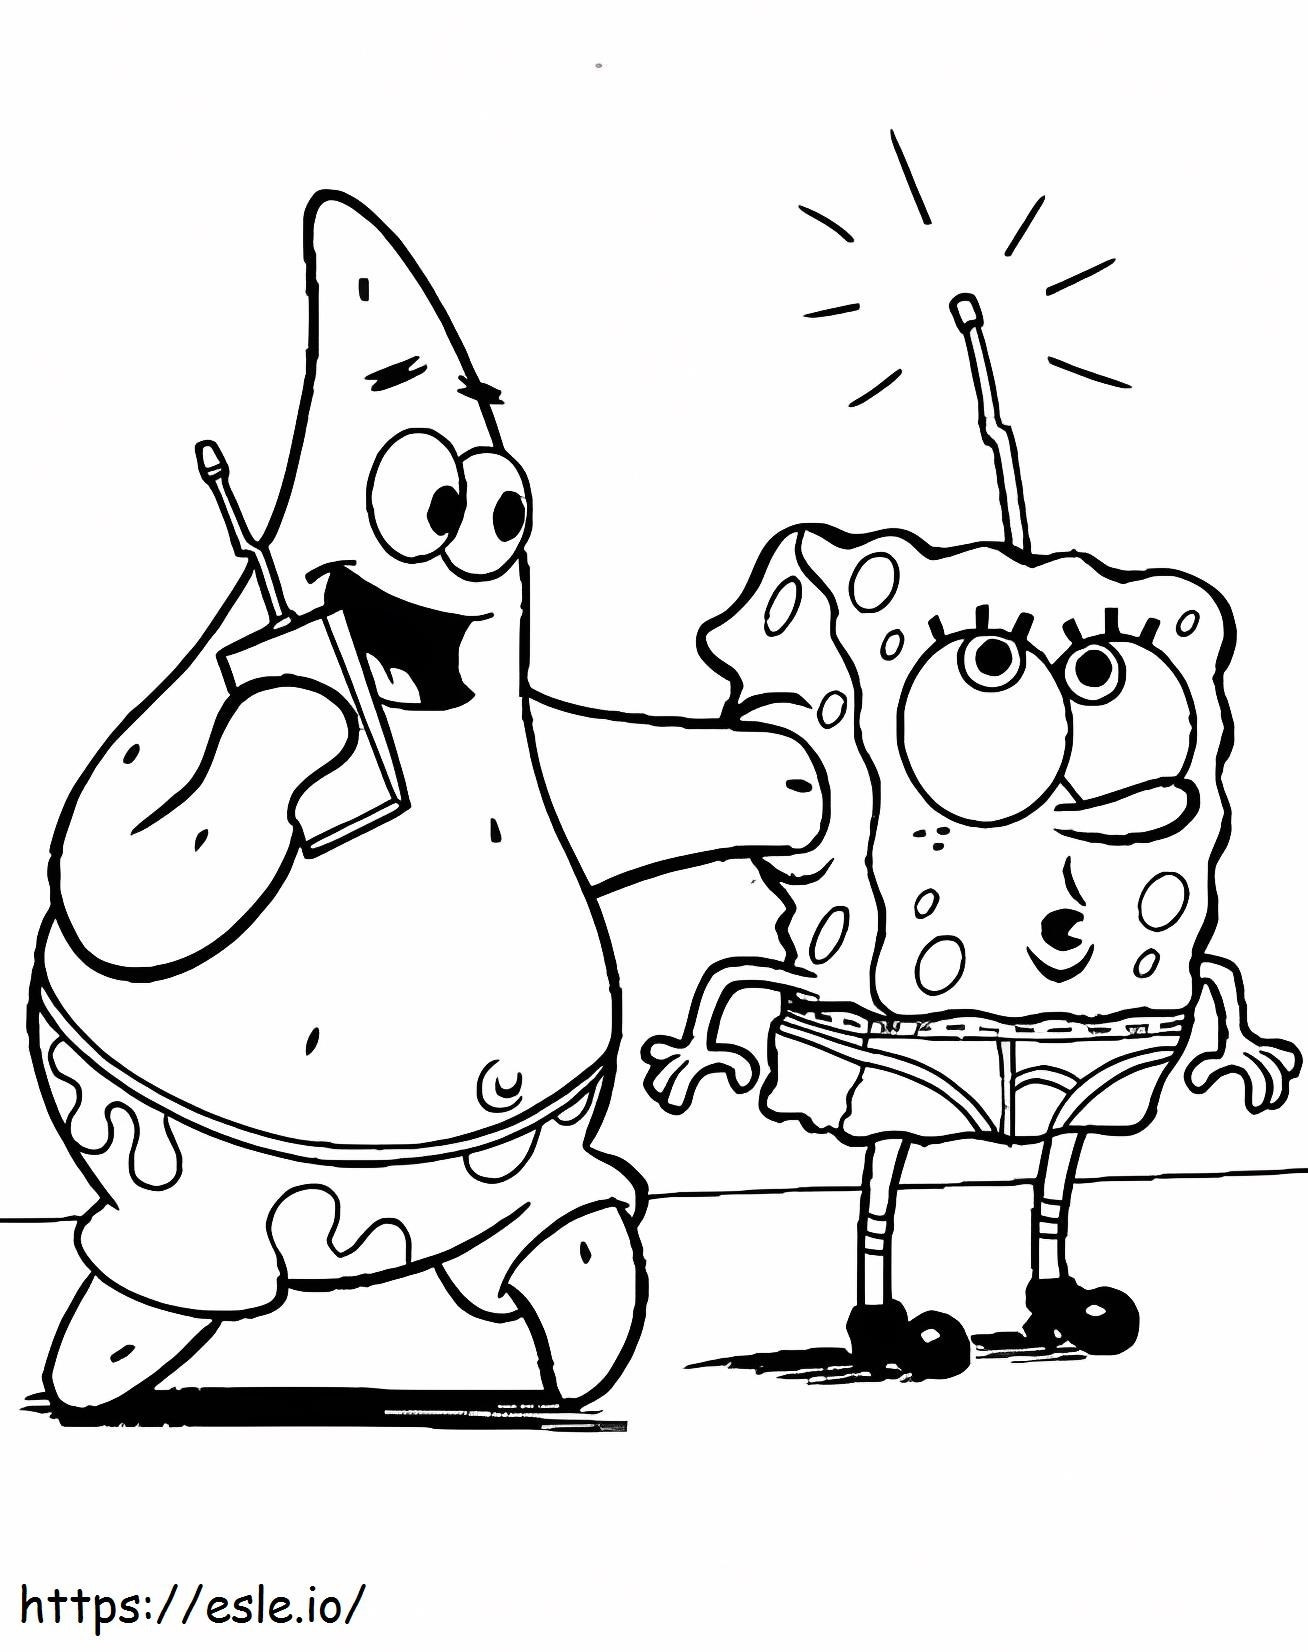 Spongebob And Patrick Radio coloring page